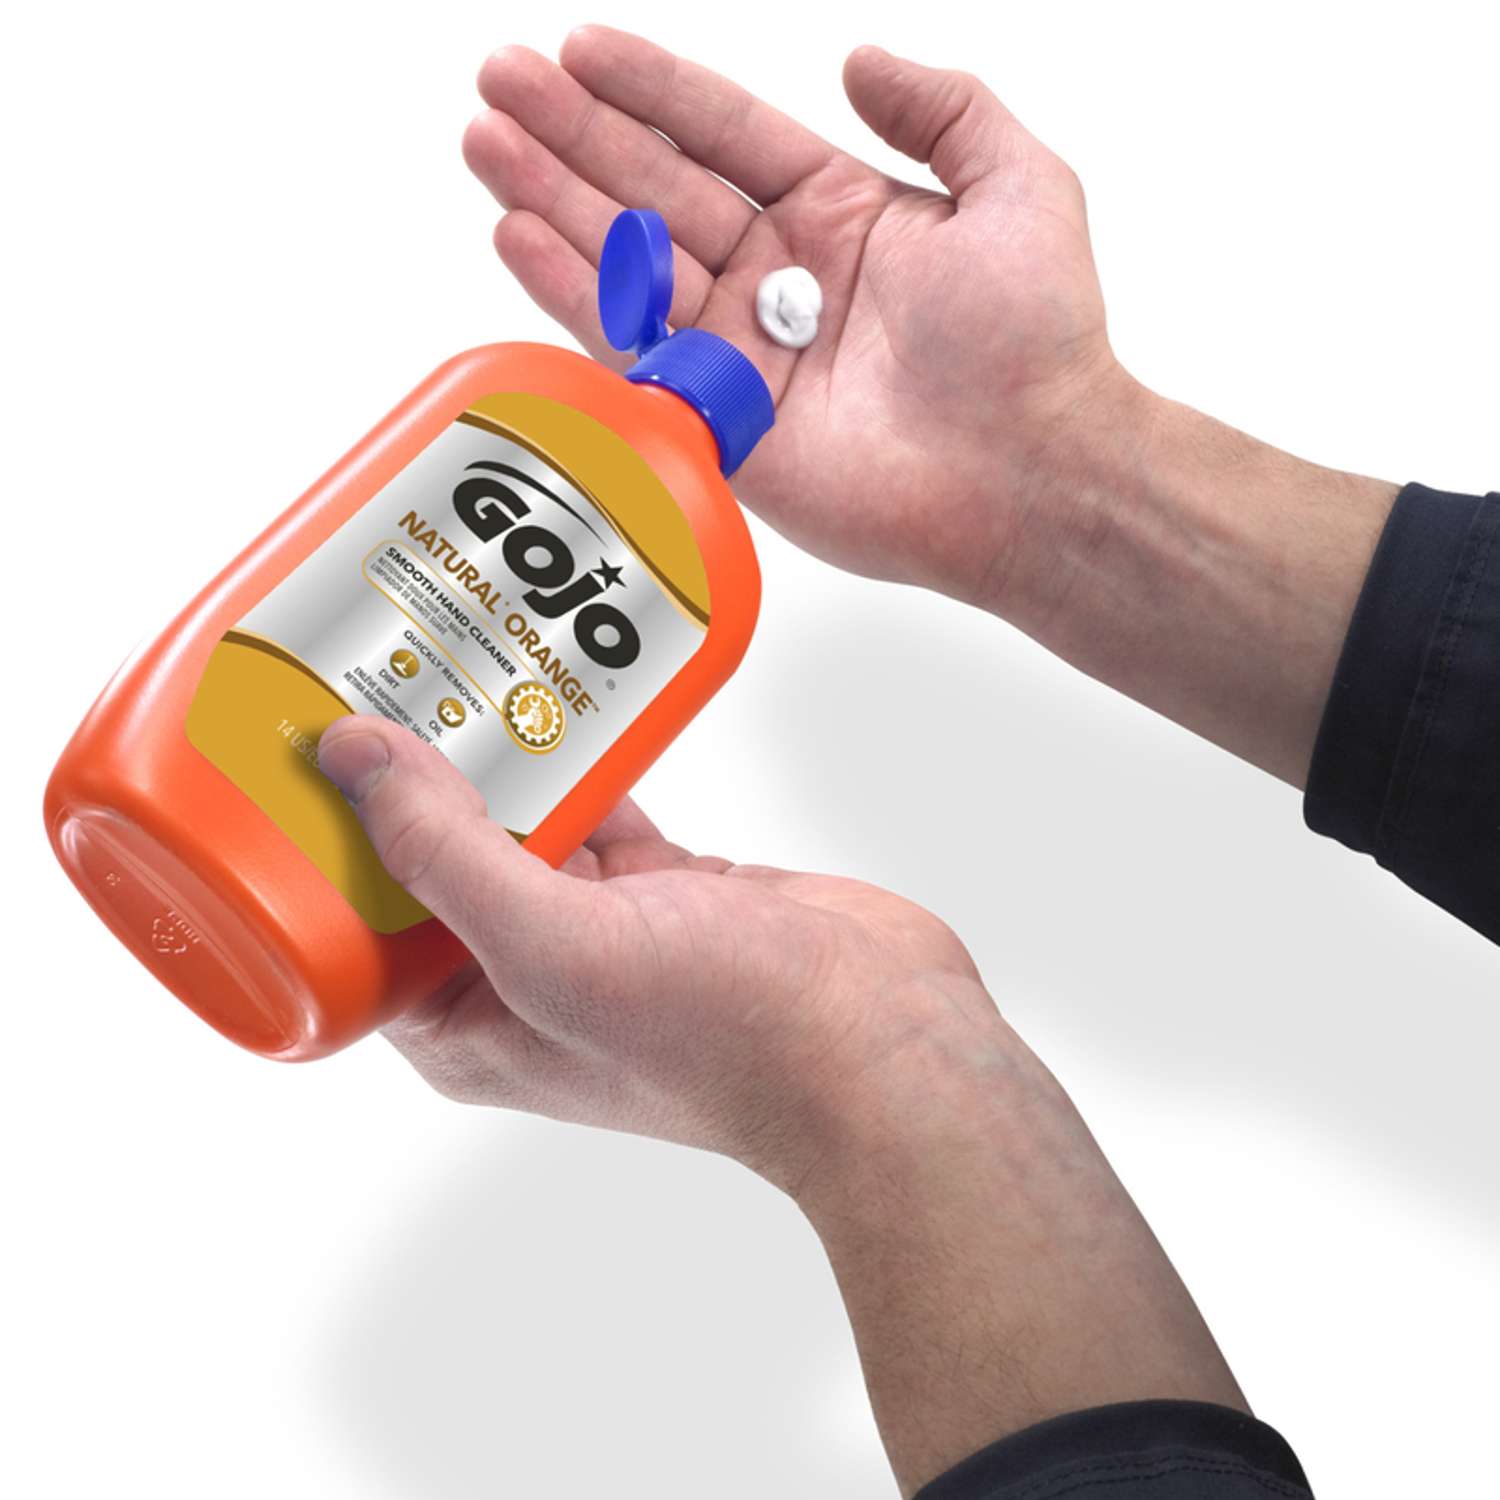 Gojo Natural Orange Citrus Scent Pumice Hand Cleaner 0.5 gal - Ace Hardware